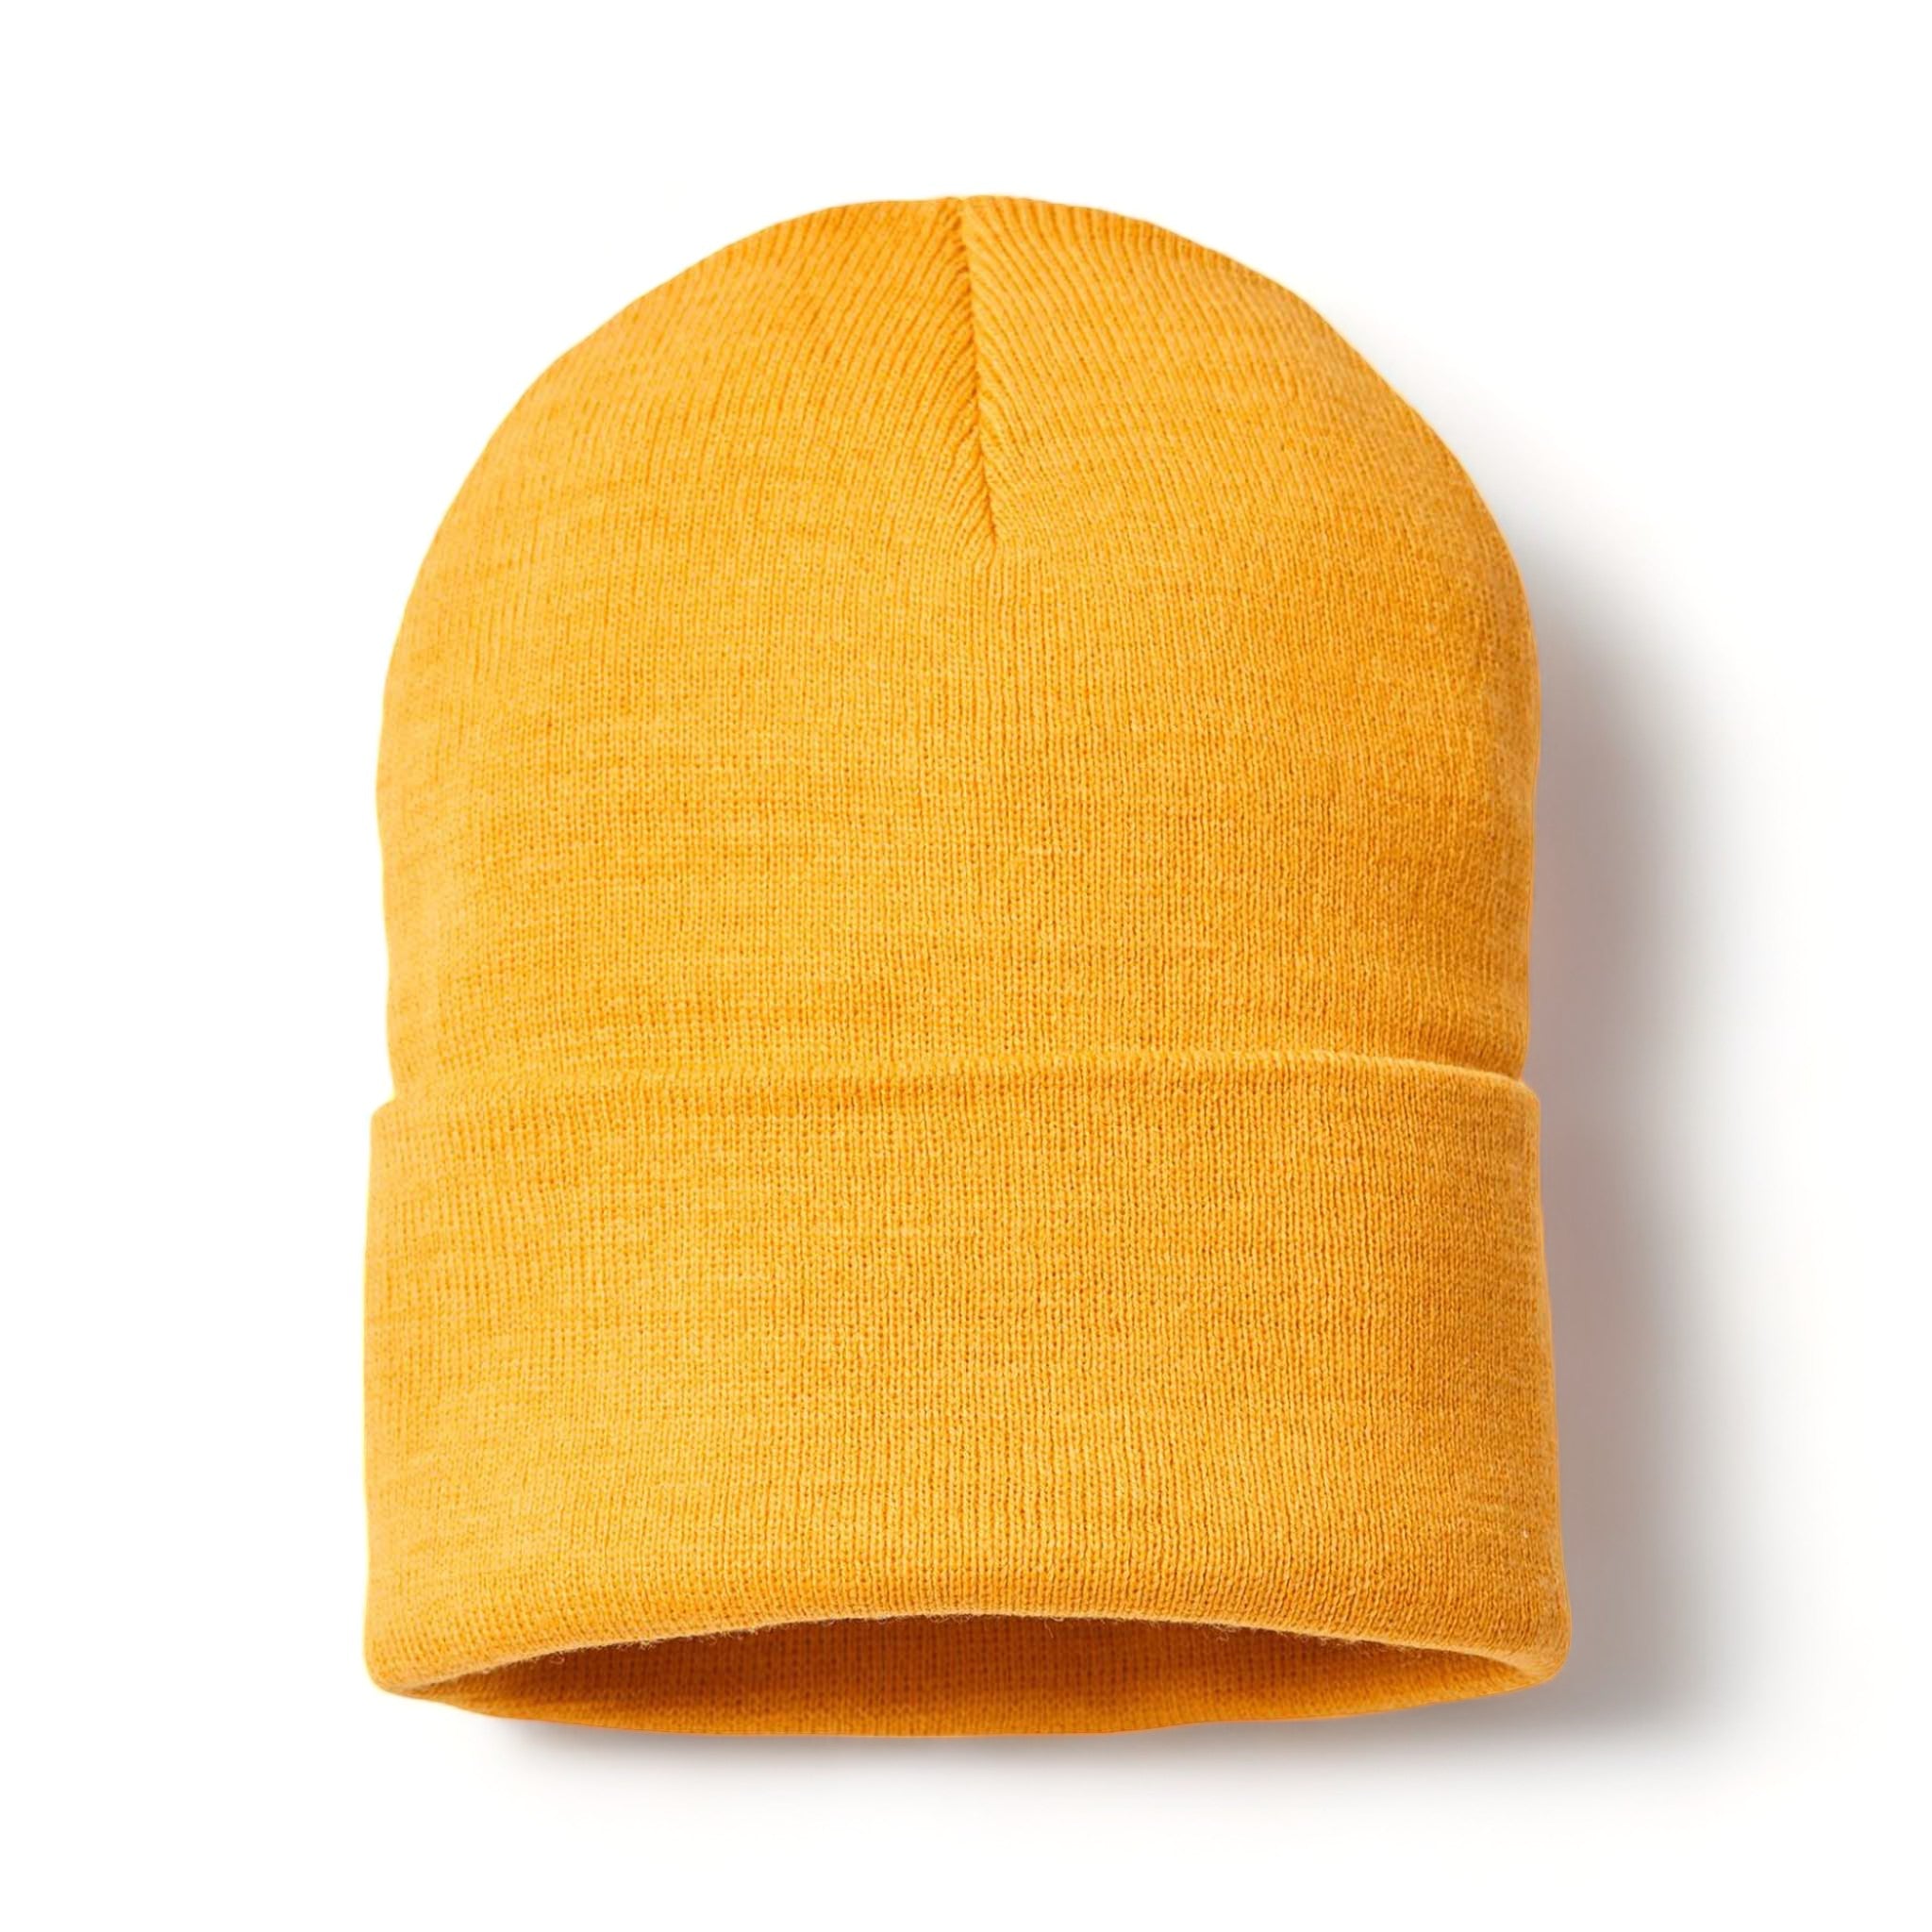 Front view of Atlantis Headwear PURE custom hat in mustard yellow